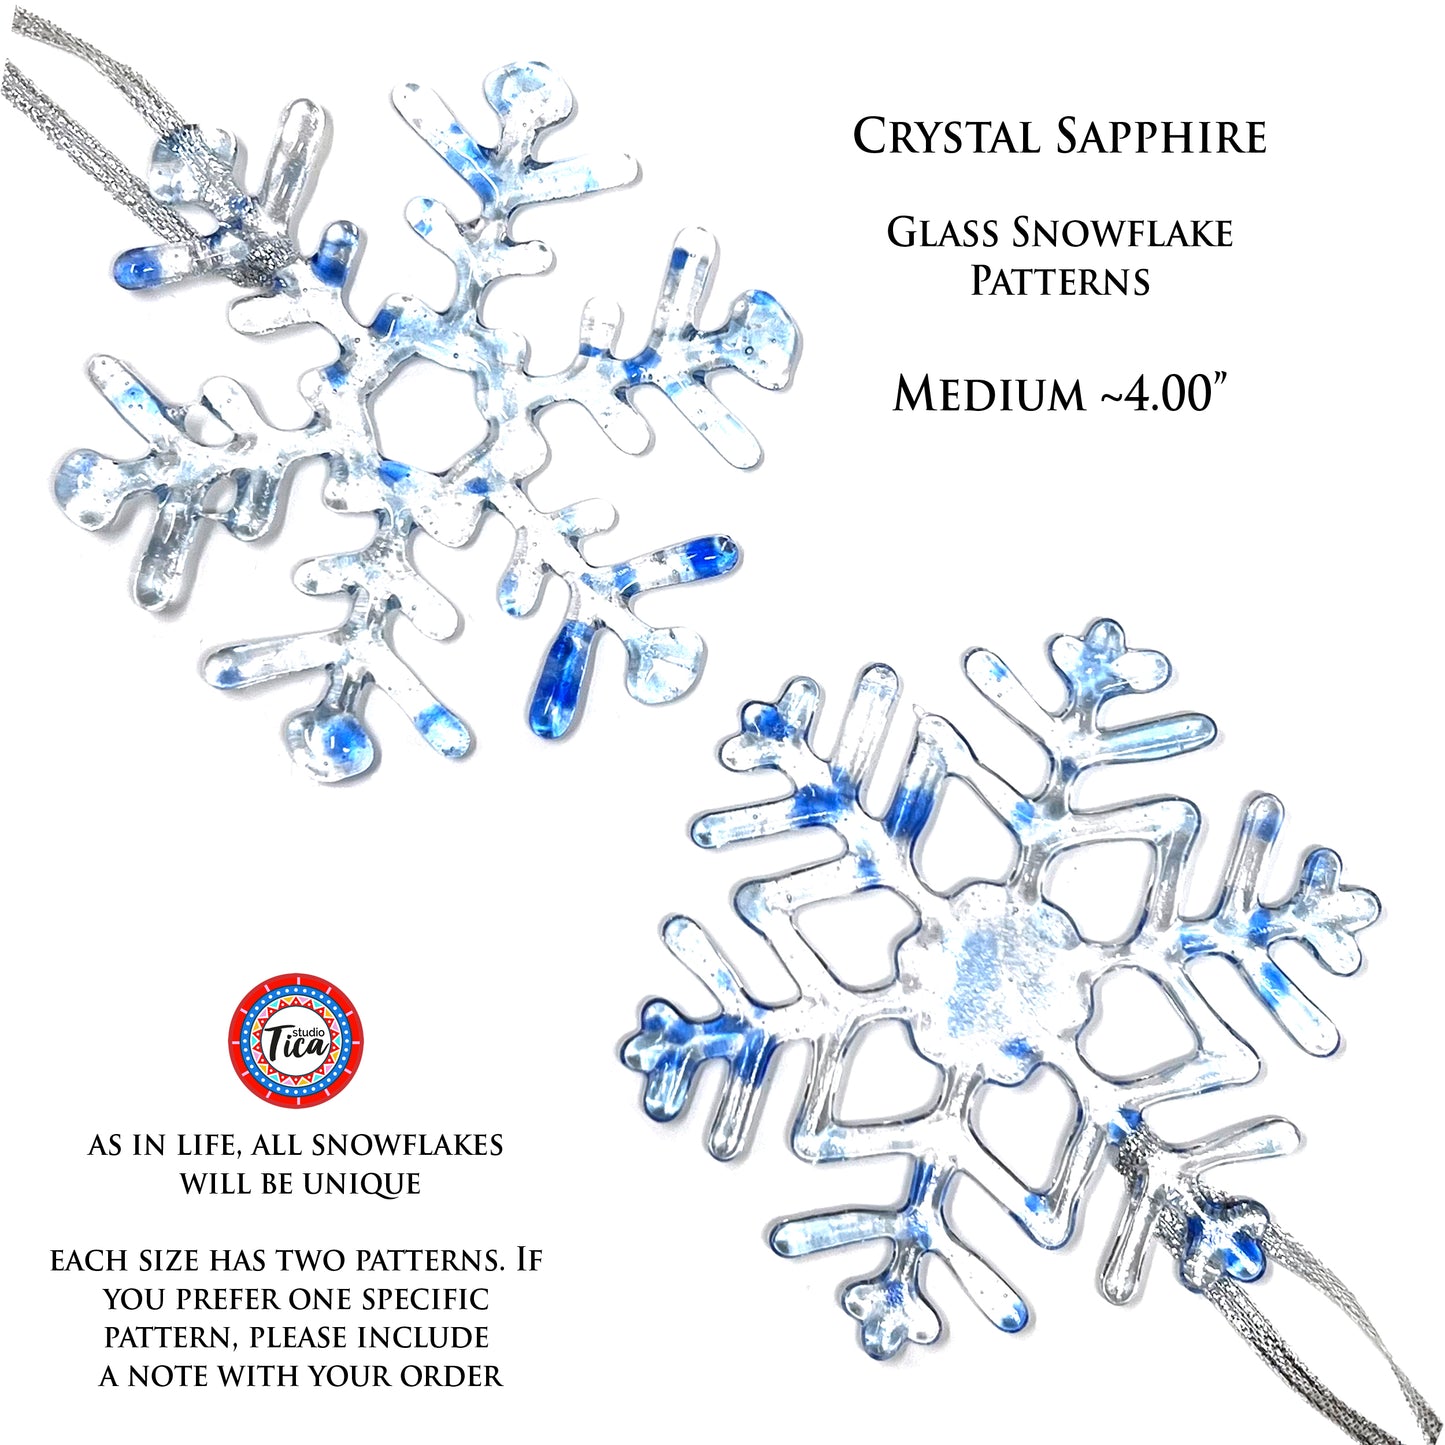 studioTica Sapphire Crystal - Handmade Glass Snowflakes